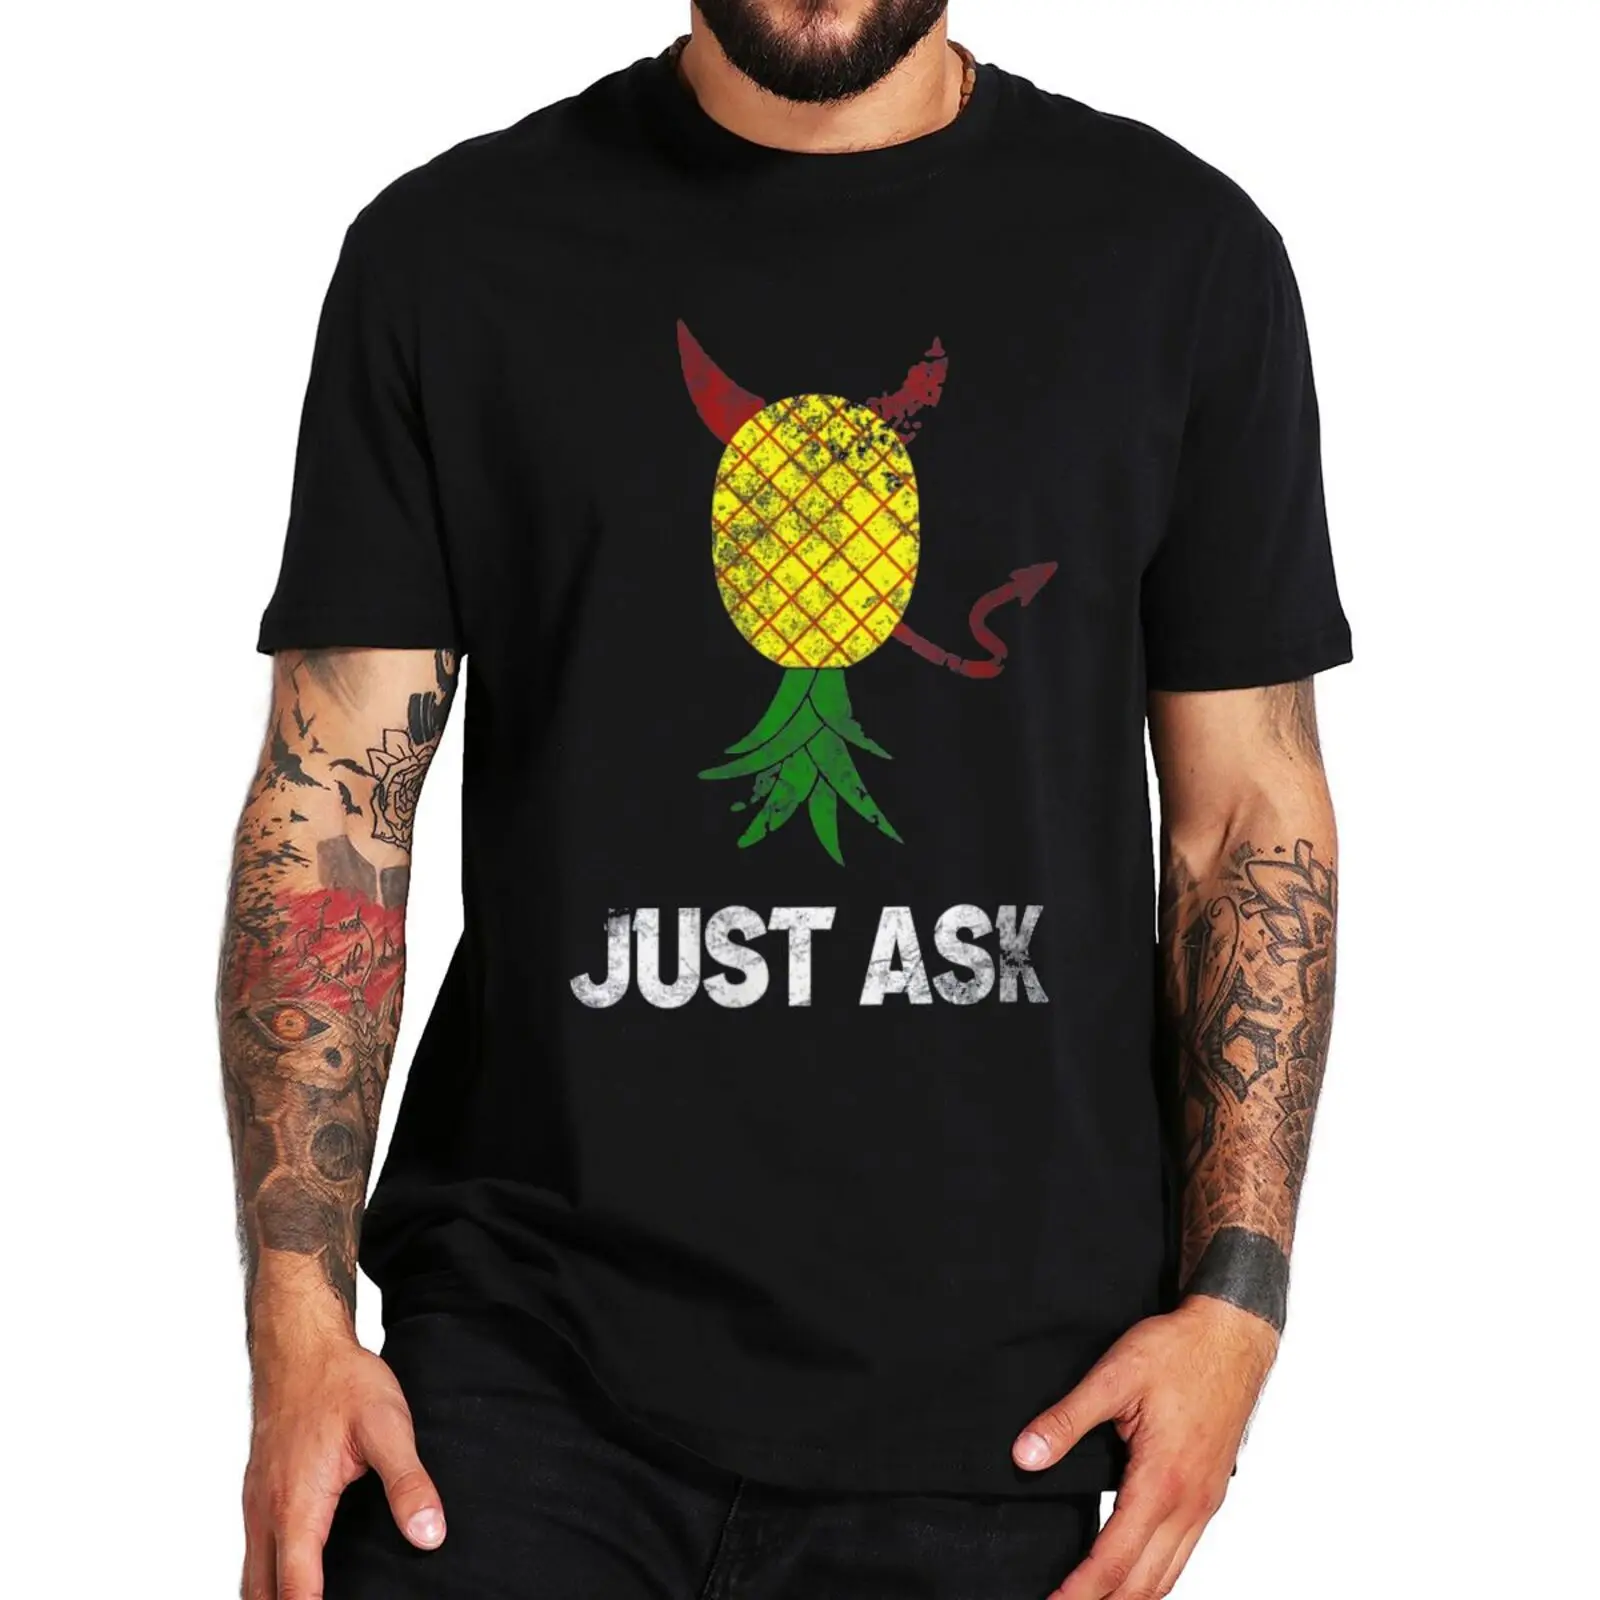 Pineapple Upside Down Just Ask Funny Meme T Shirt Vintage Short Sleeve Tshirt For Men Women 100% Cotton EU Size Tee Tops